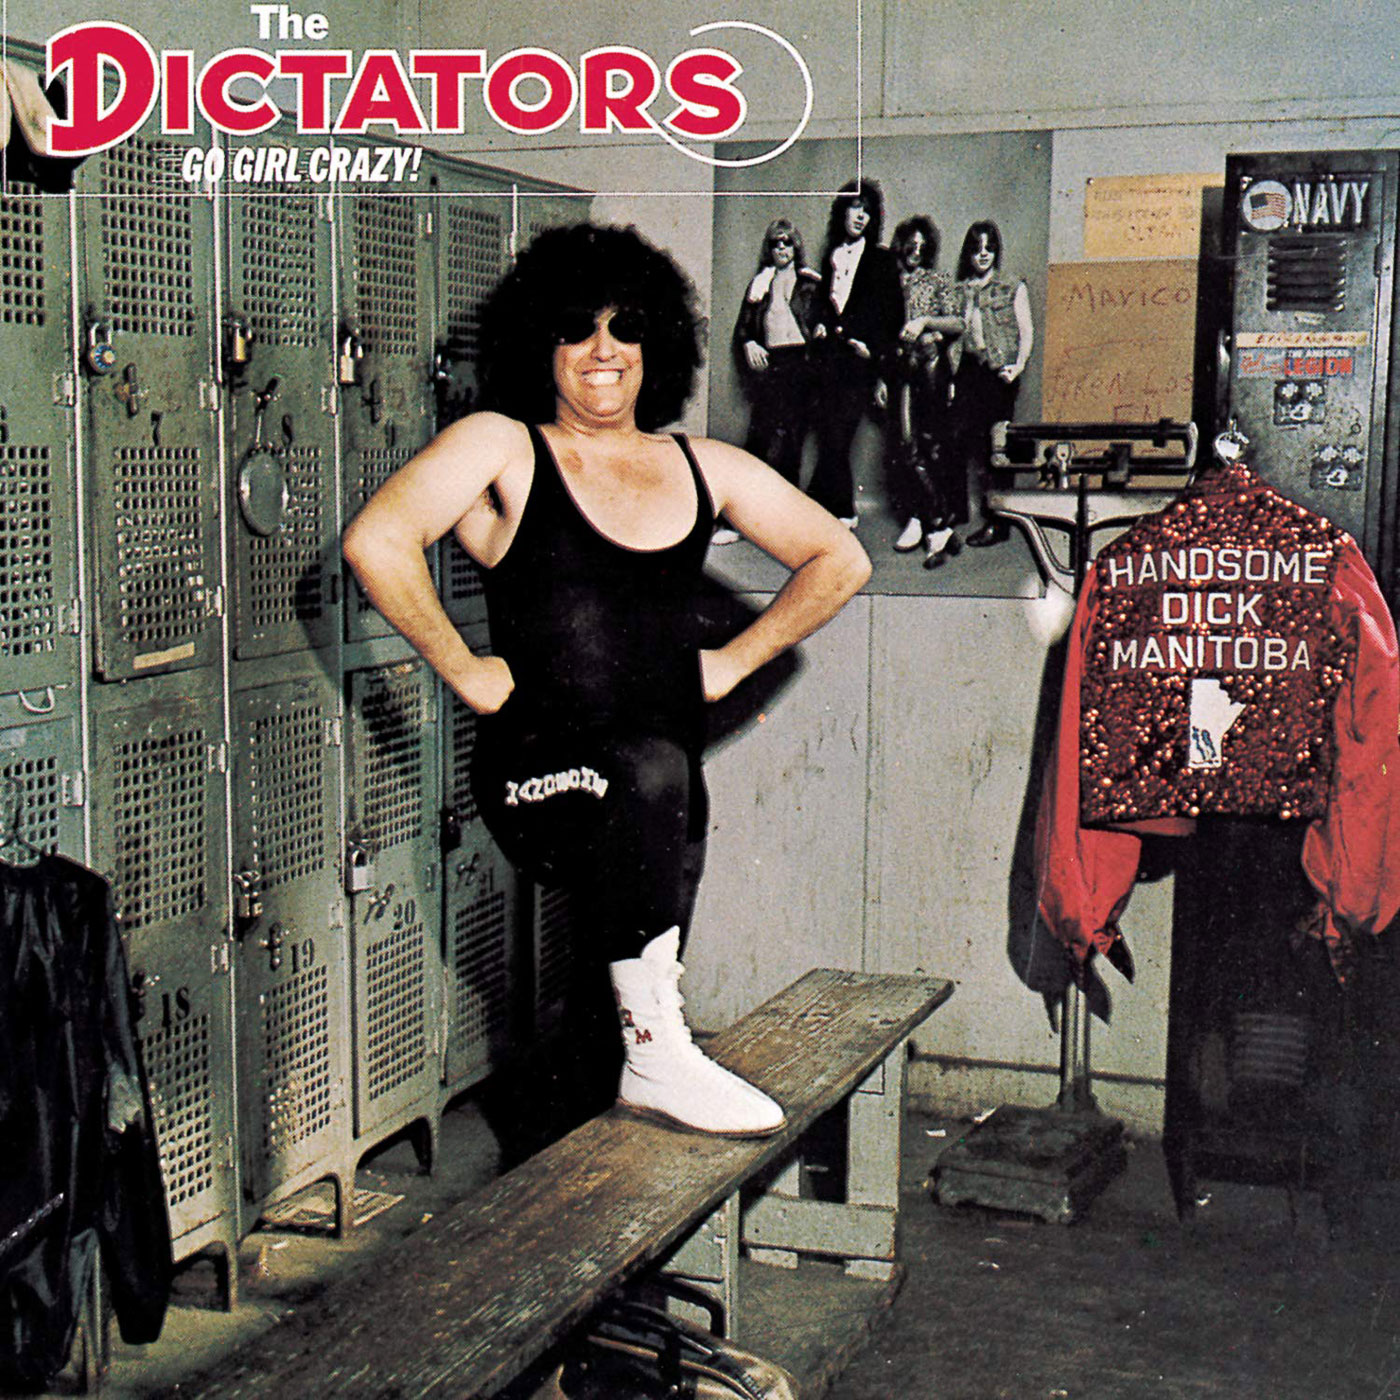 328 The Dictators – Go Girl Crazy!